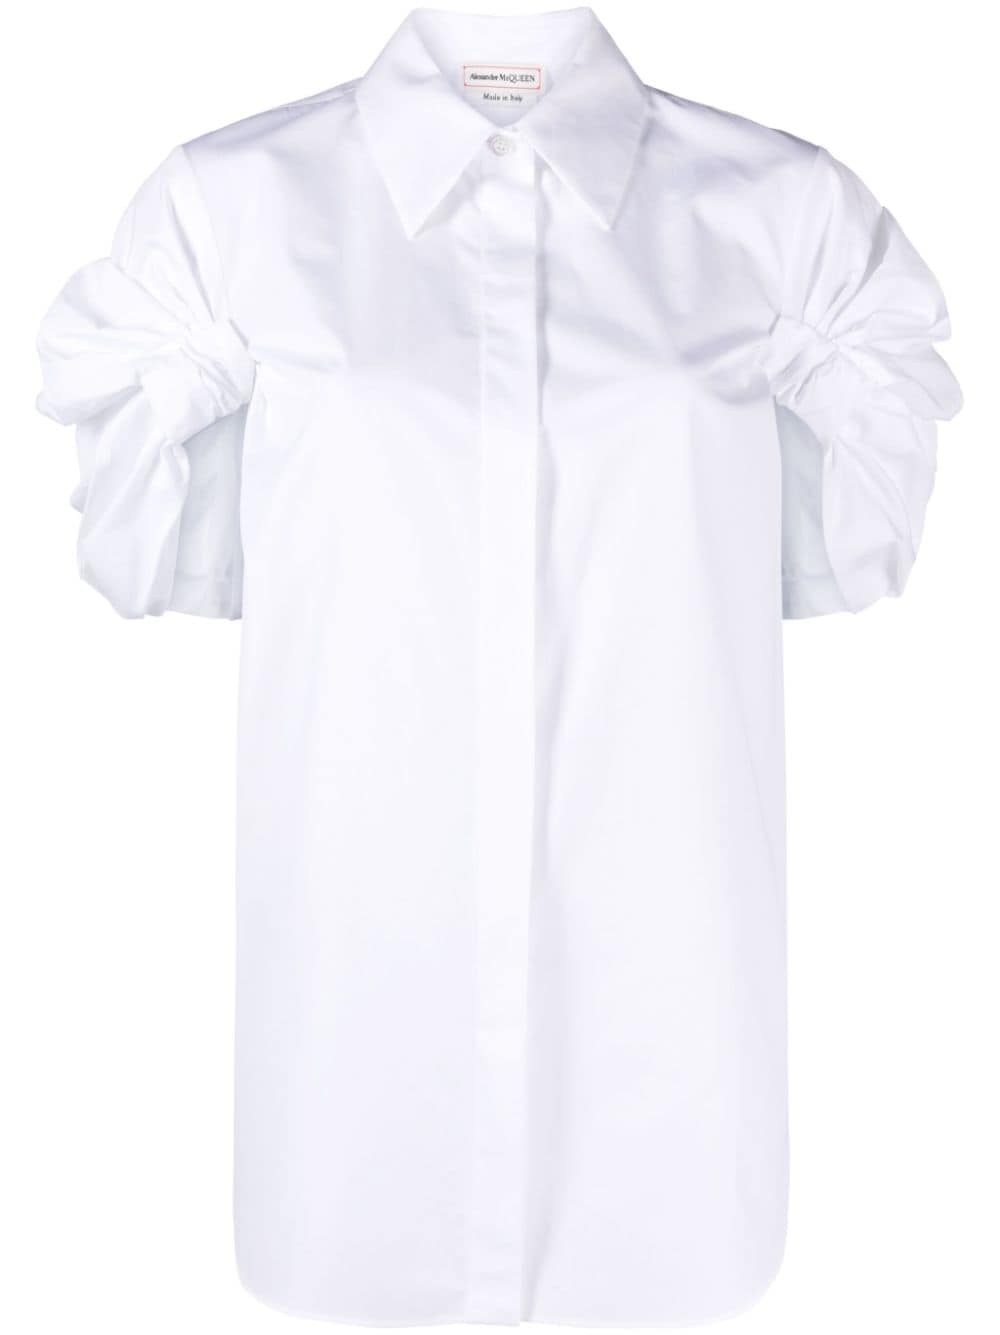 Poplin texture white shirt